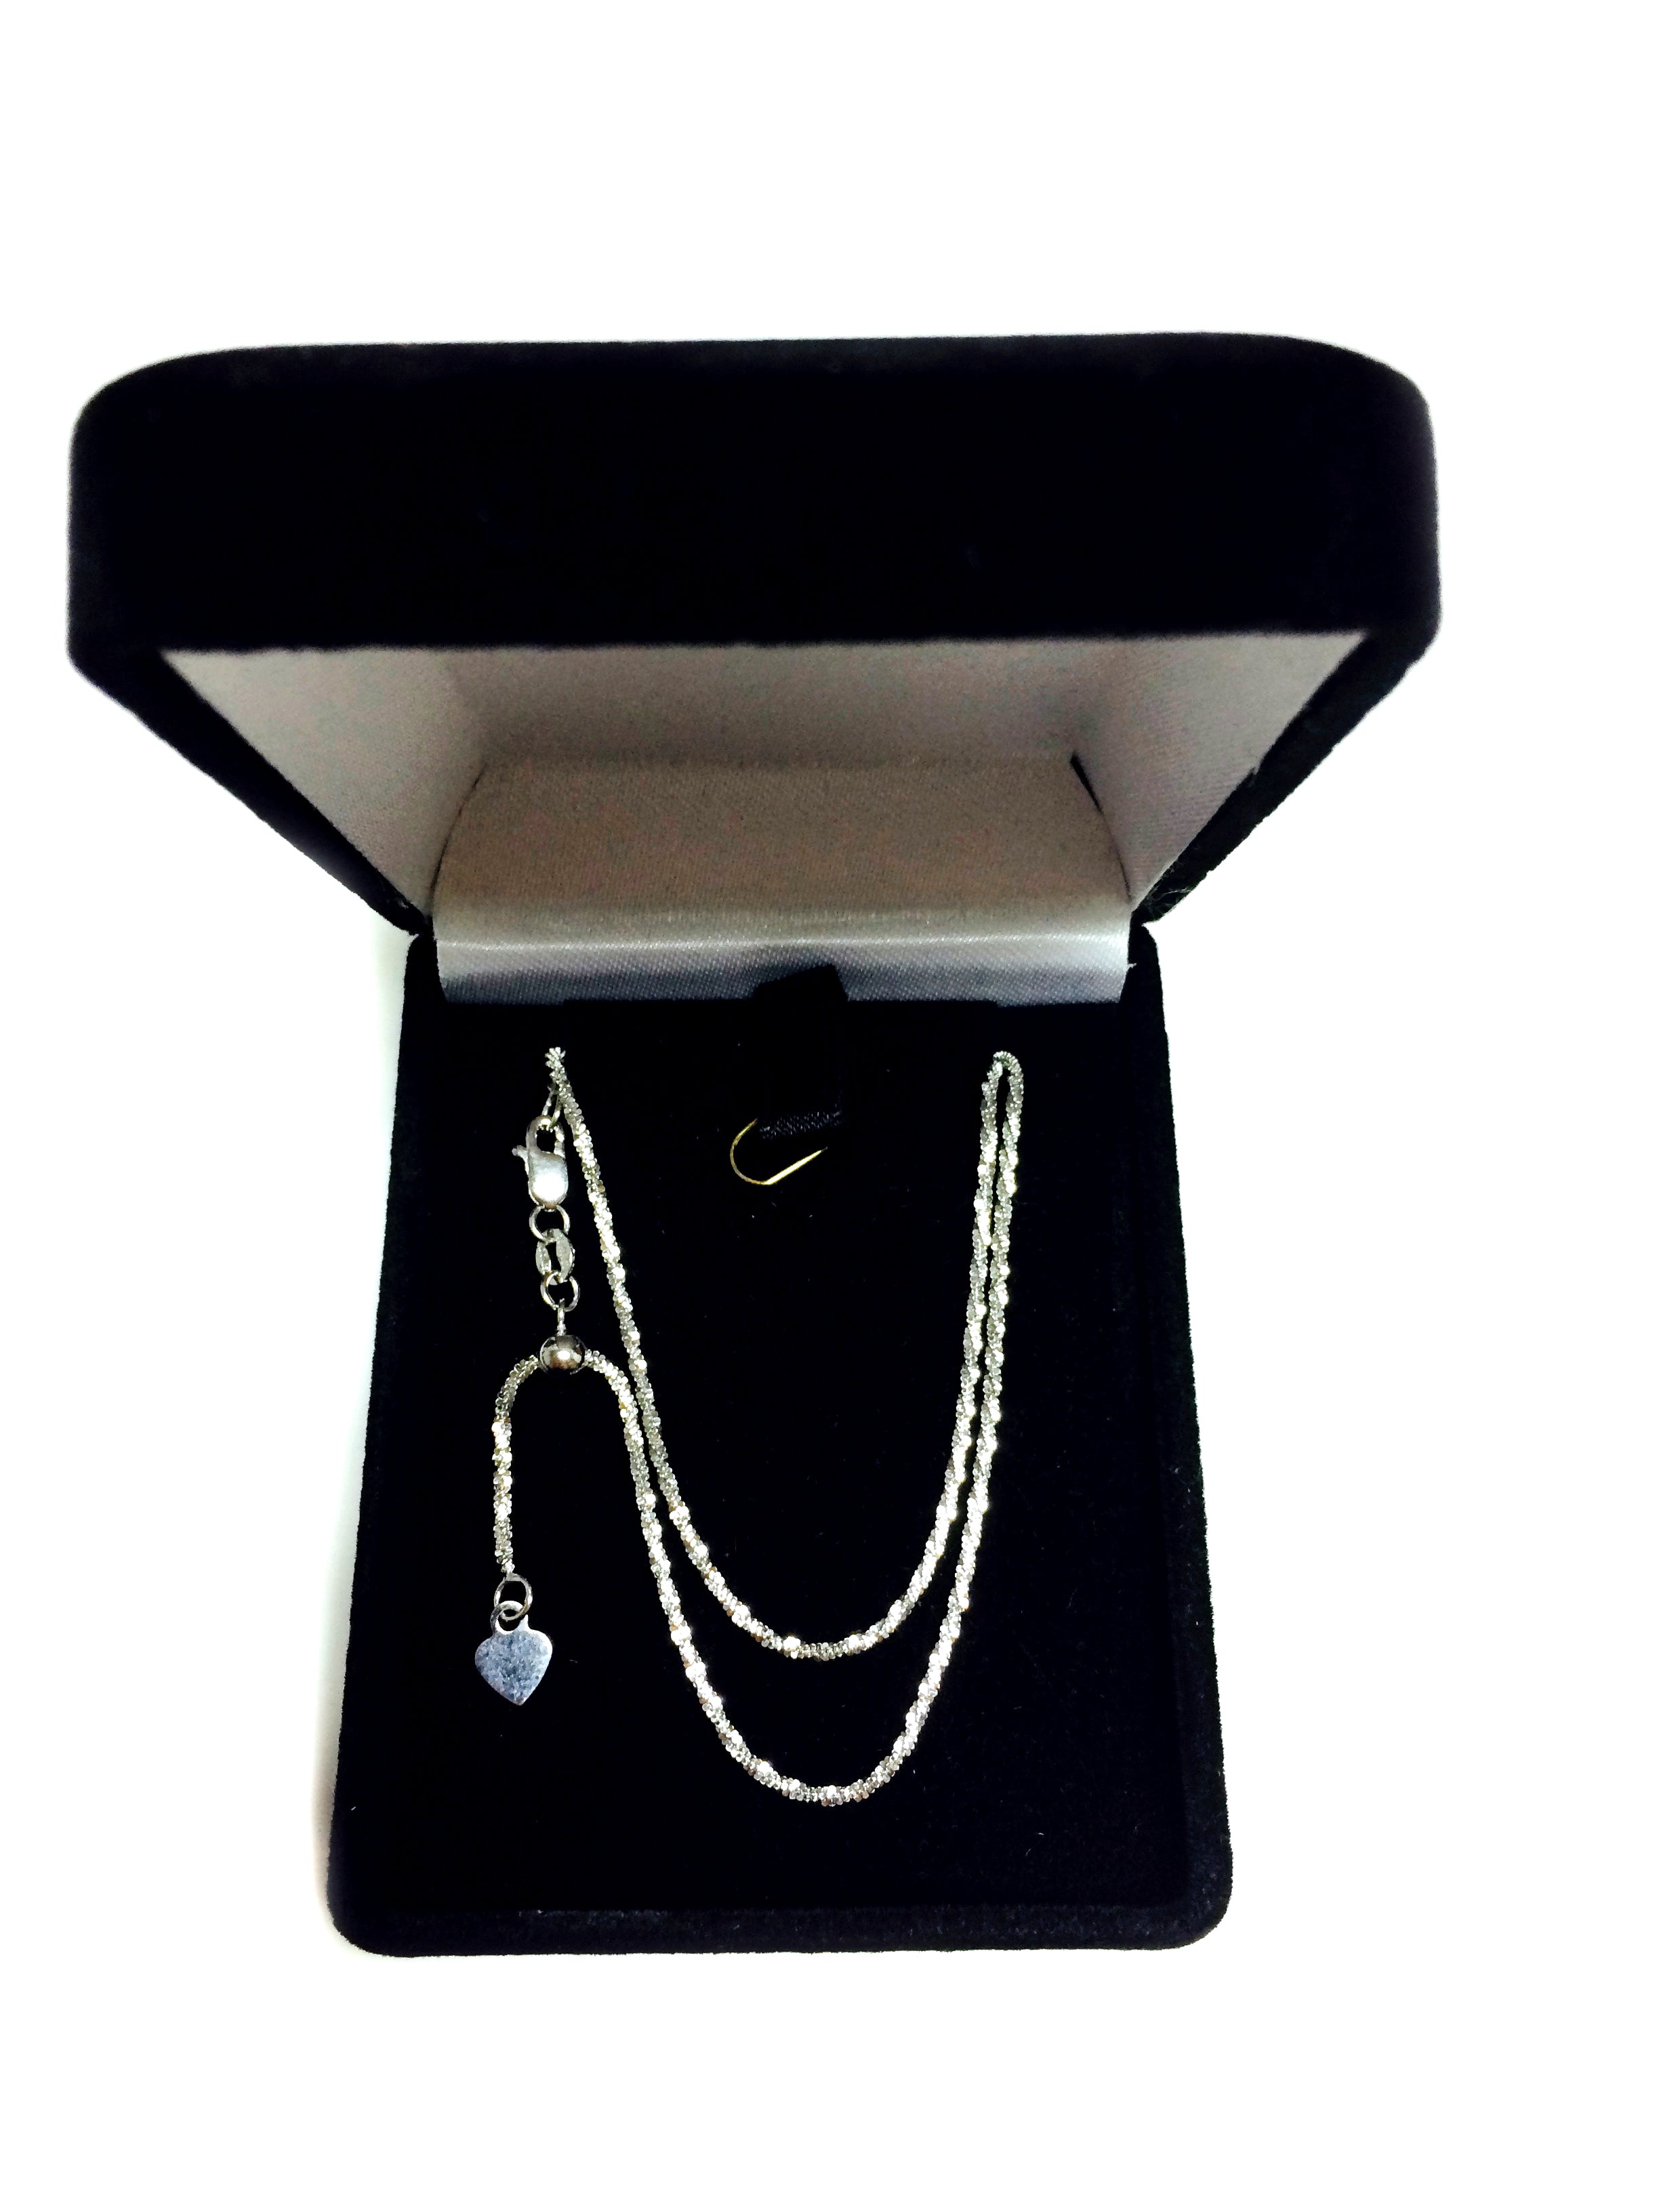 10k White Gold Adjustable Sparkle Link Chain Necklace, 1.5mm, 22"